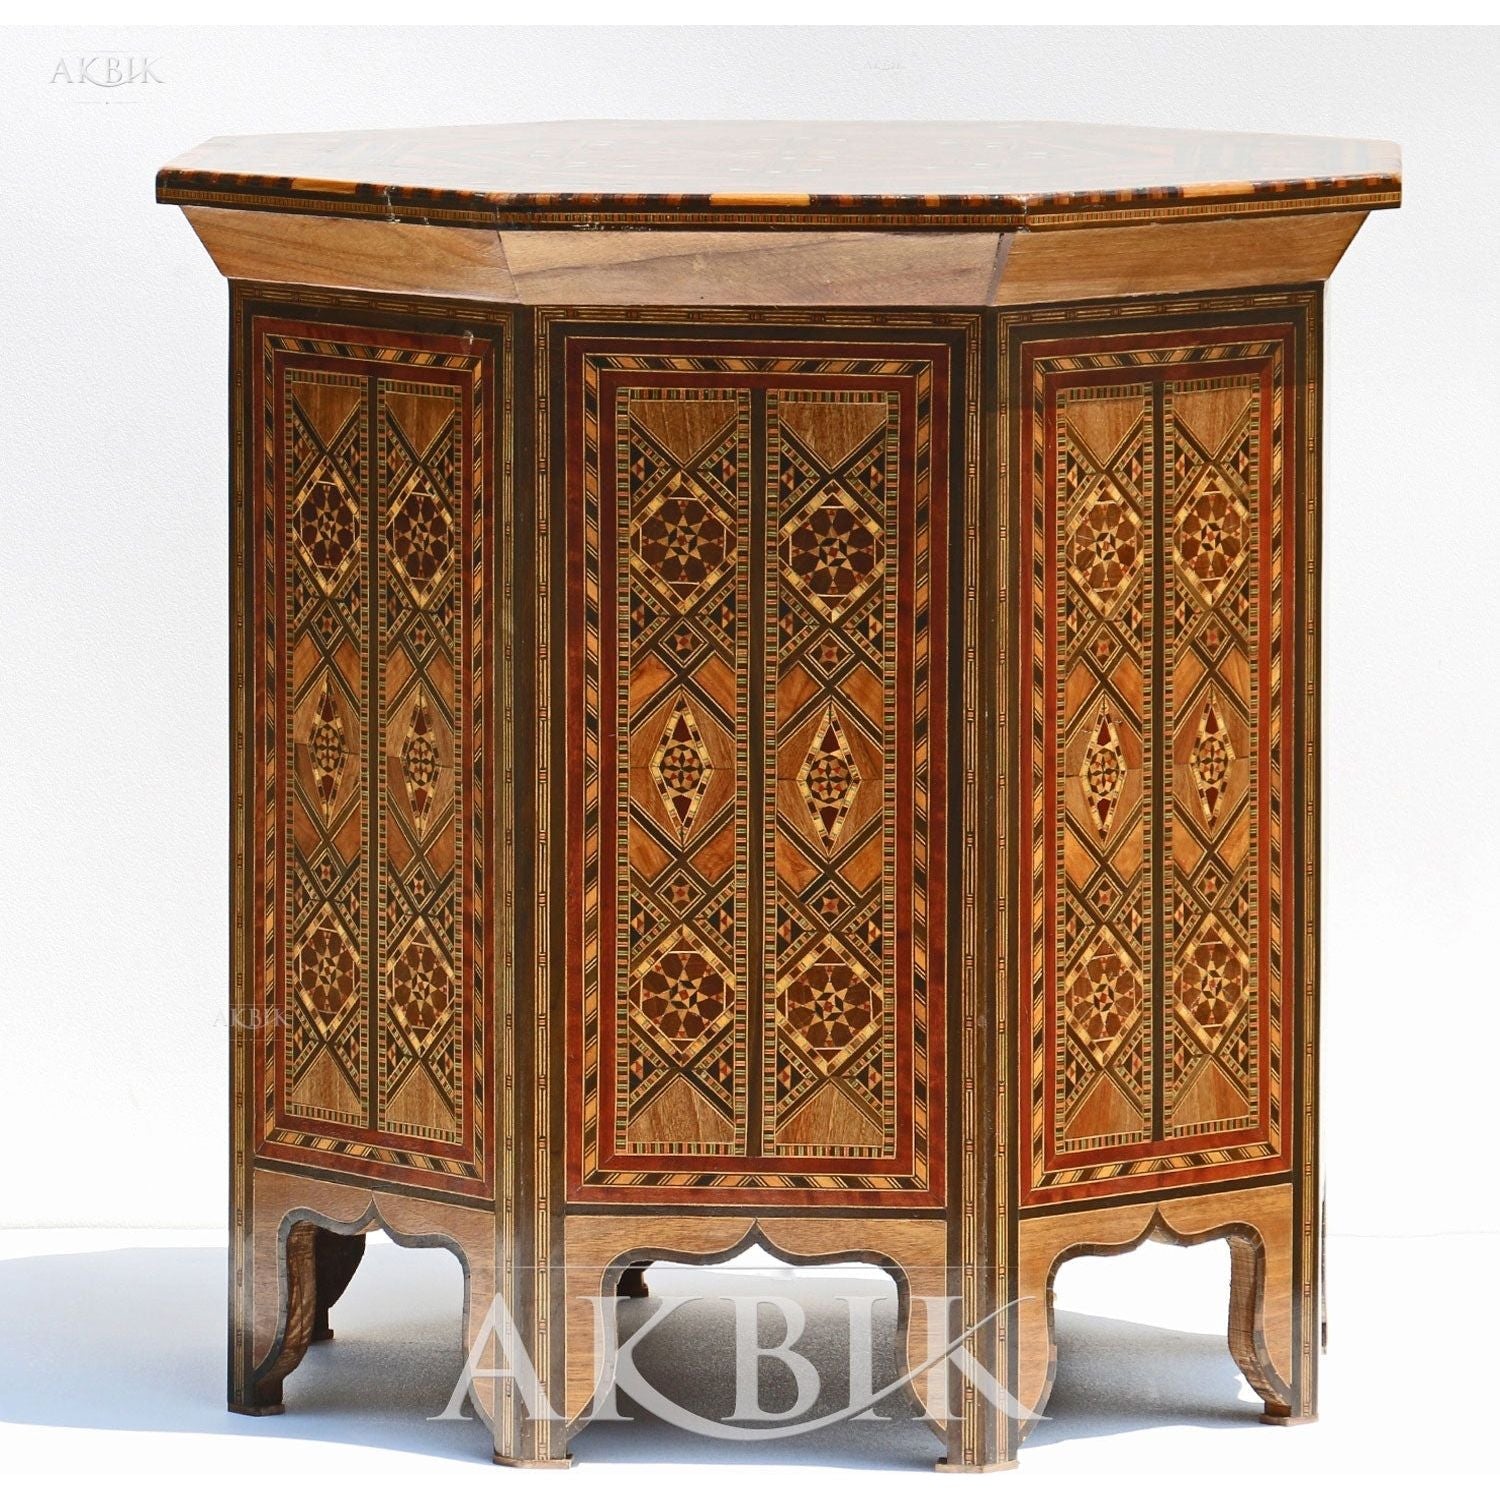 STARS LIKE MARQUETRY SIDE TABLE - AKBIK Furniture & Design